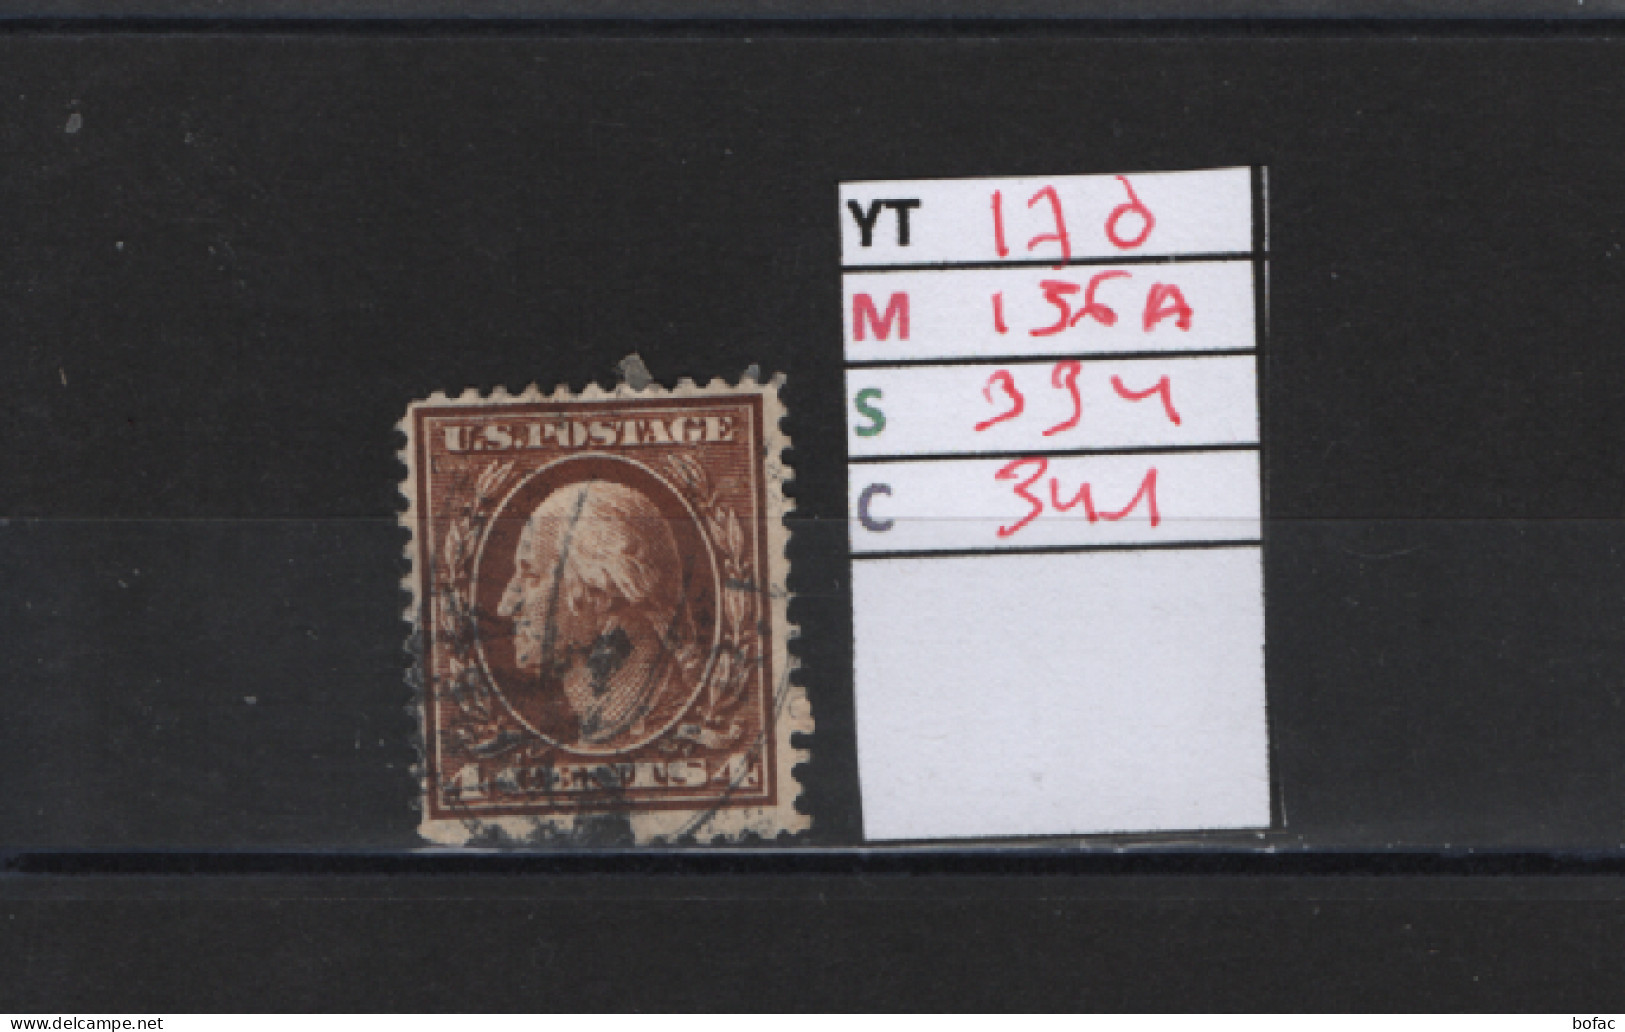 PRIX FIXE Obl 170 YT 156A MIC 334 SCOT 341 GIB George Washington 1908 1909 58/05 - Used Stamps